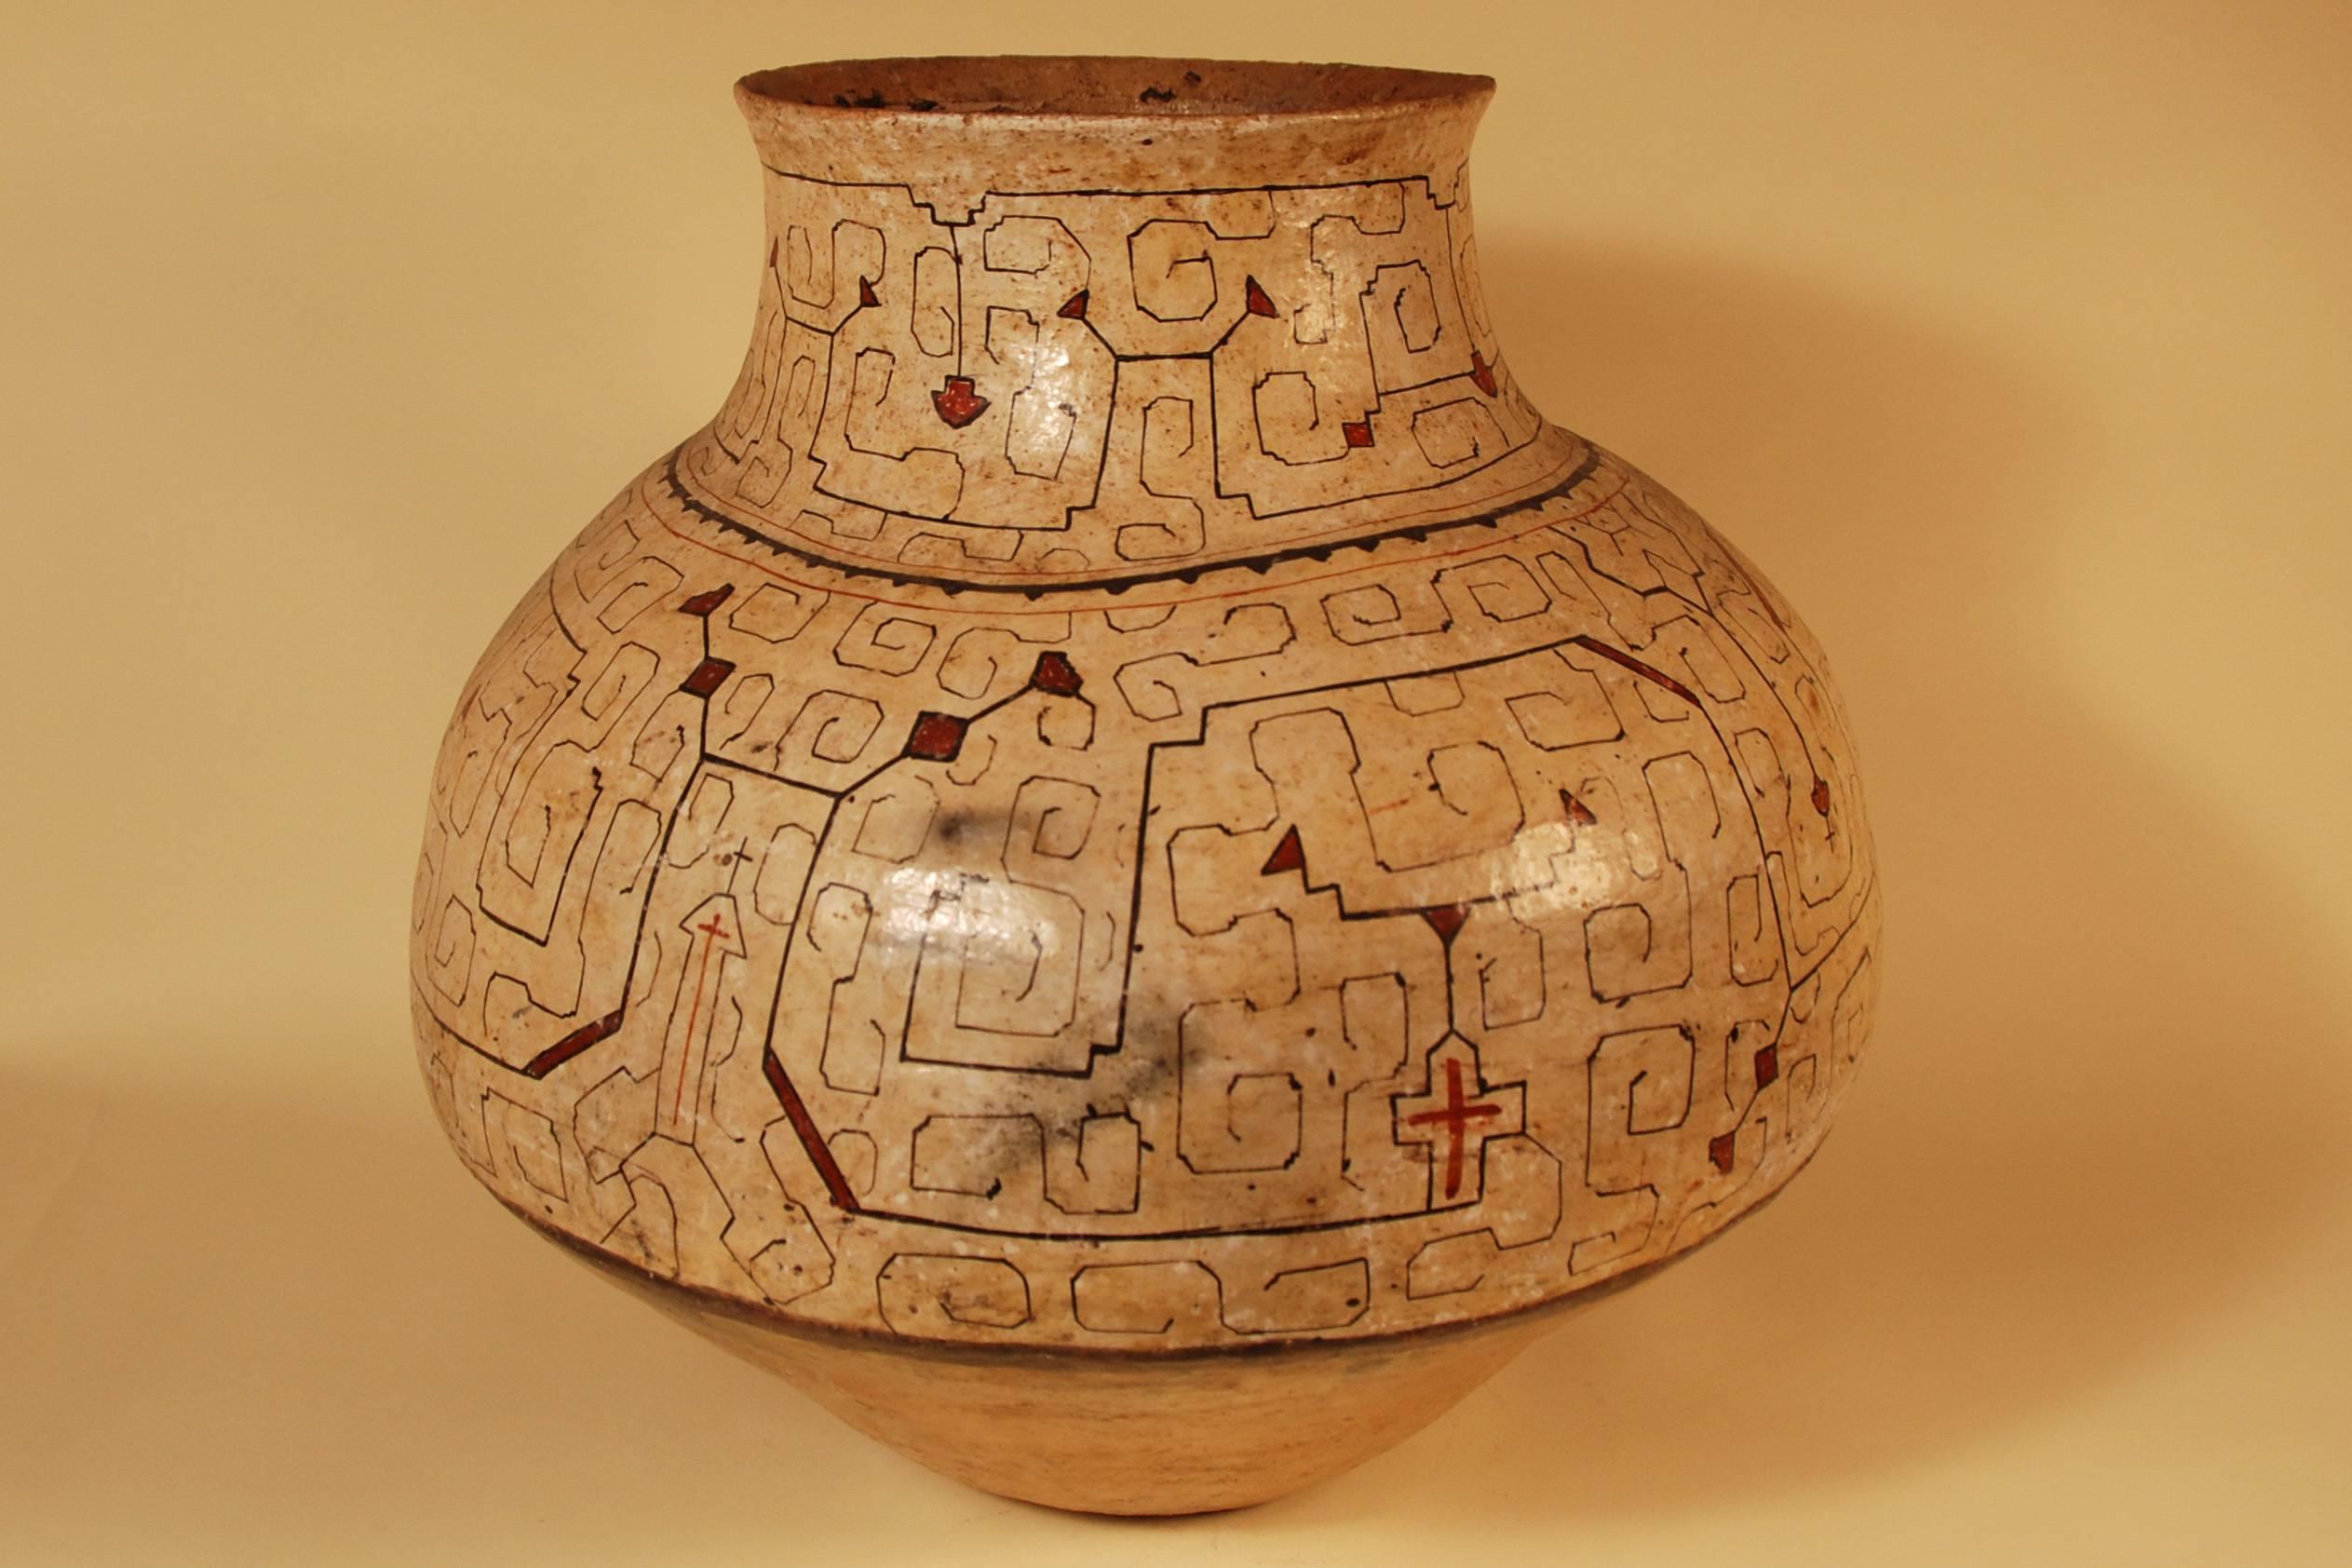 Hand-Crafted Mid-20th Century Large Tribal Ceramic Pot, Shipibo Culture Peruvian Amazon